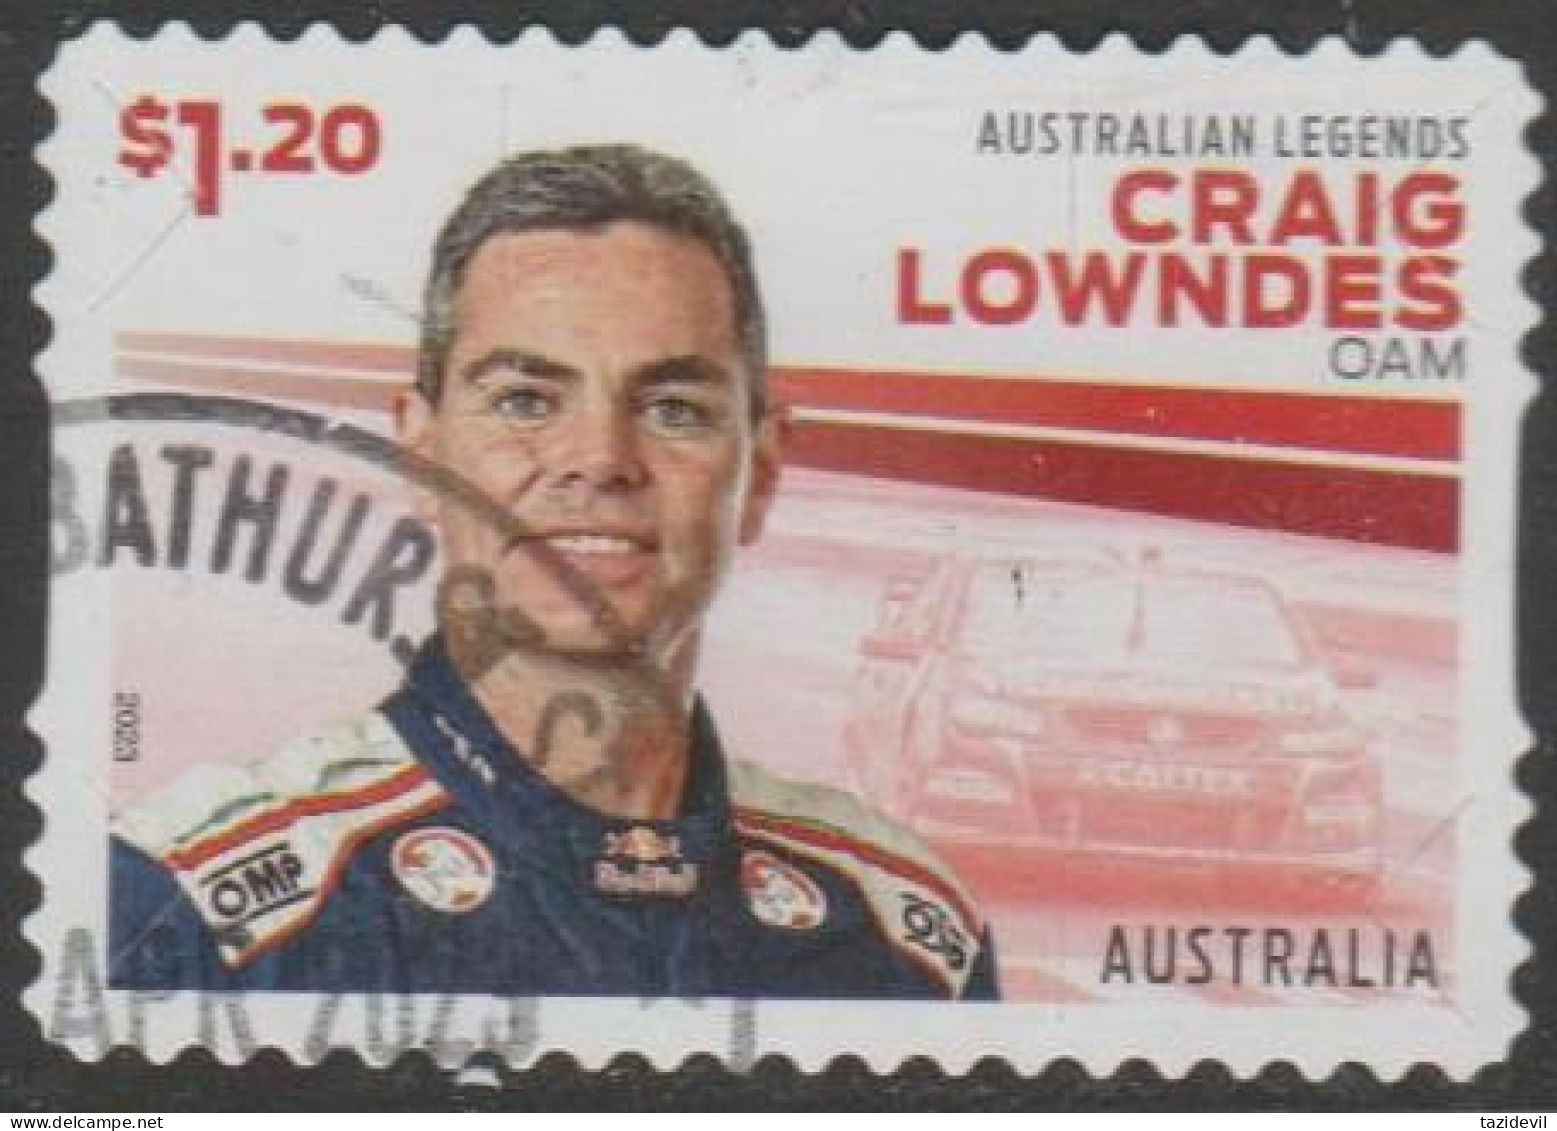 AUSTRALIA - DIE-CUT-USED 2023 $1.20 Legends Of Motor Sport - Craig Lowdens OAM - Used Stamps